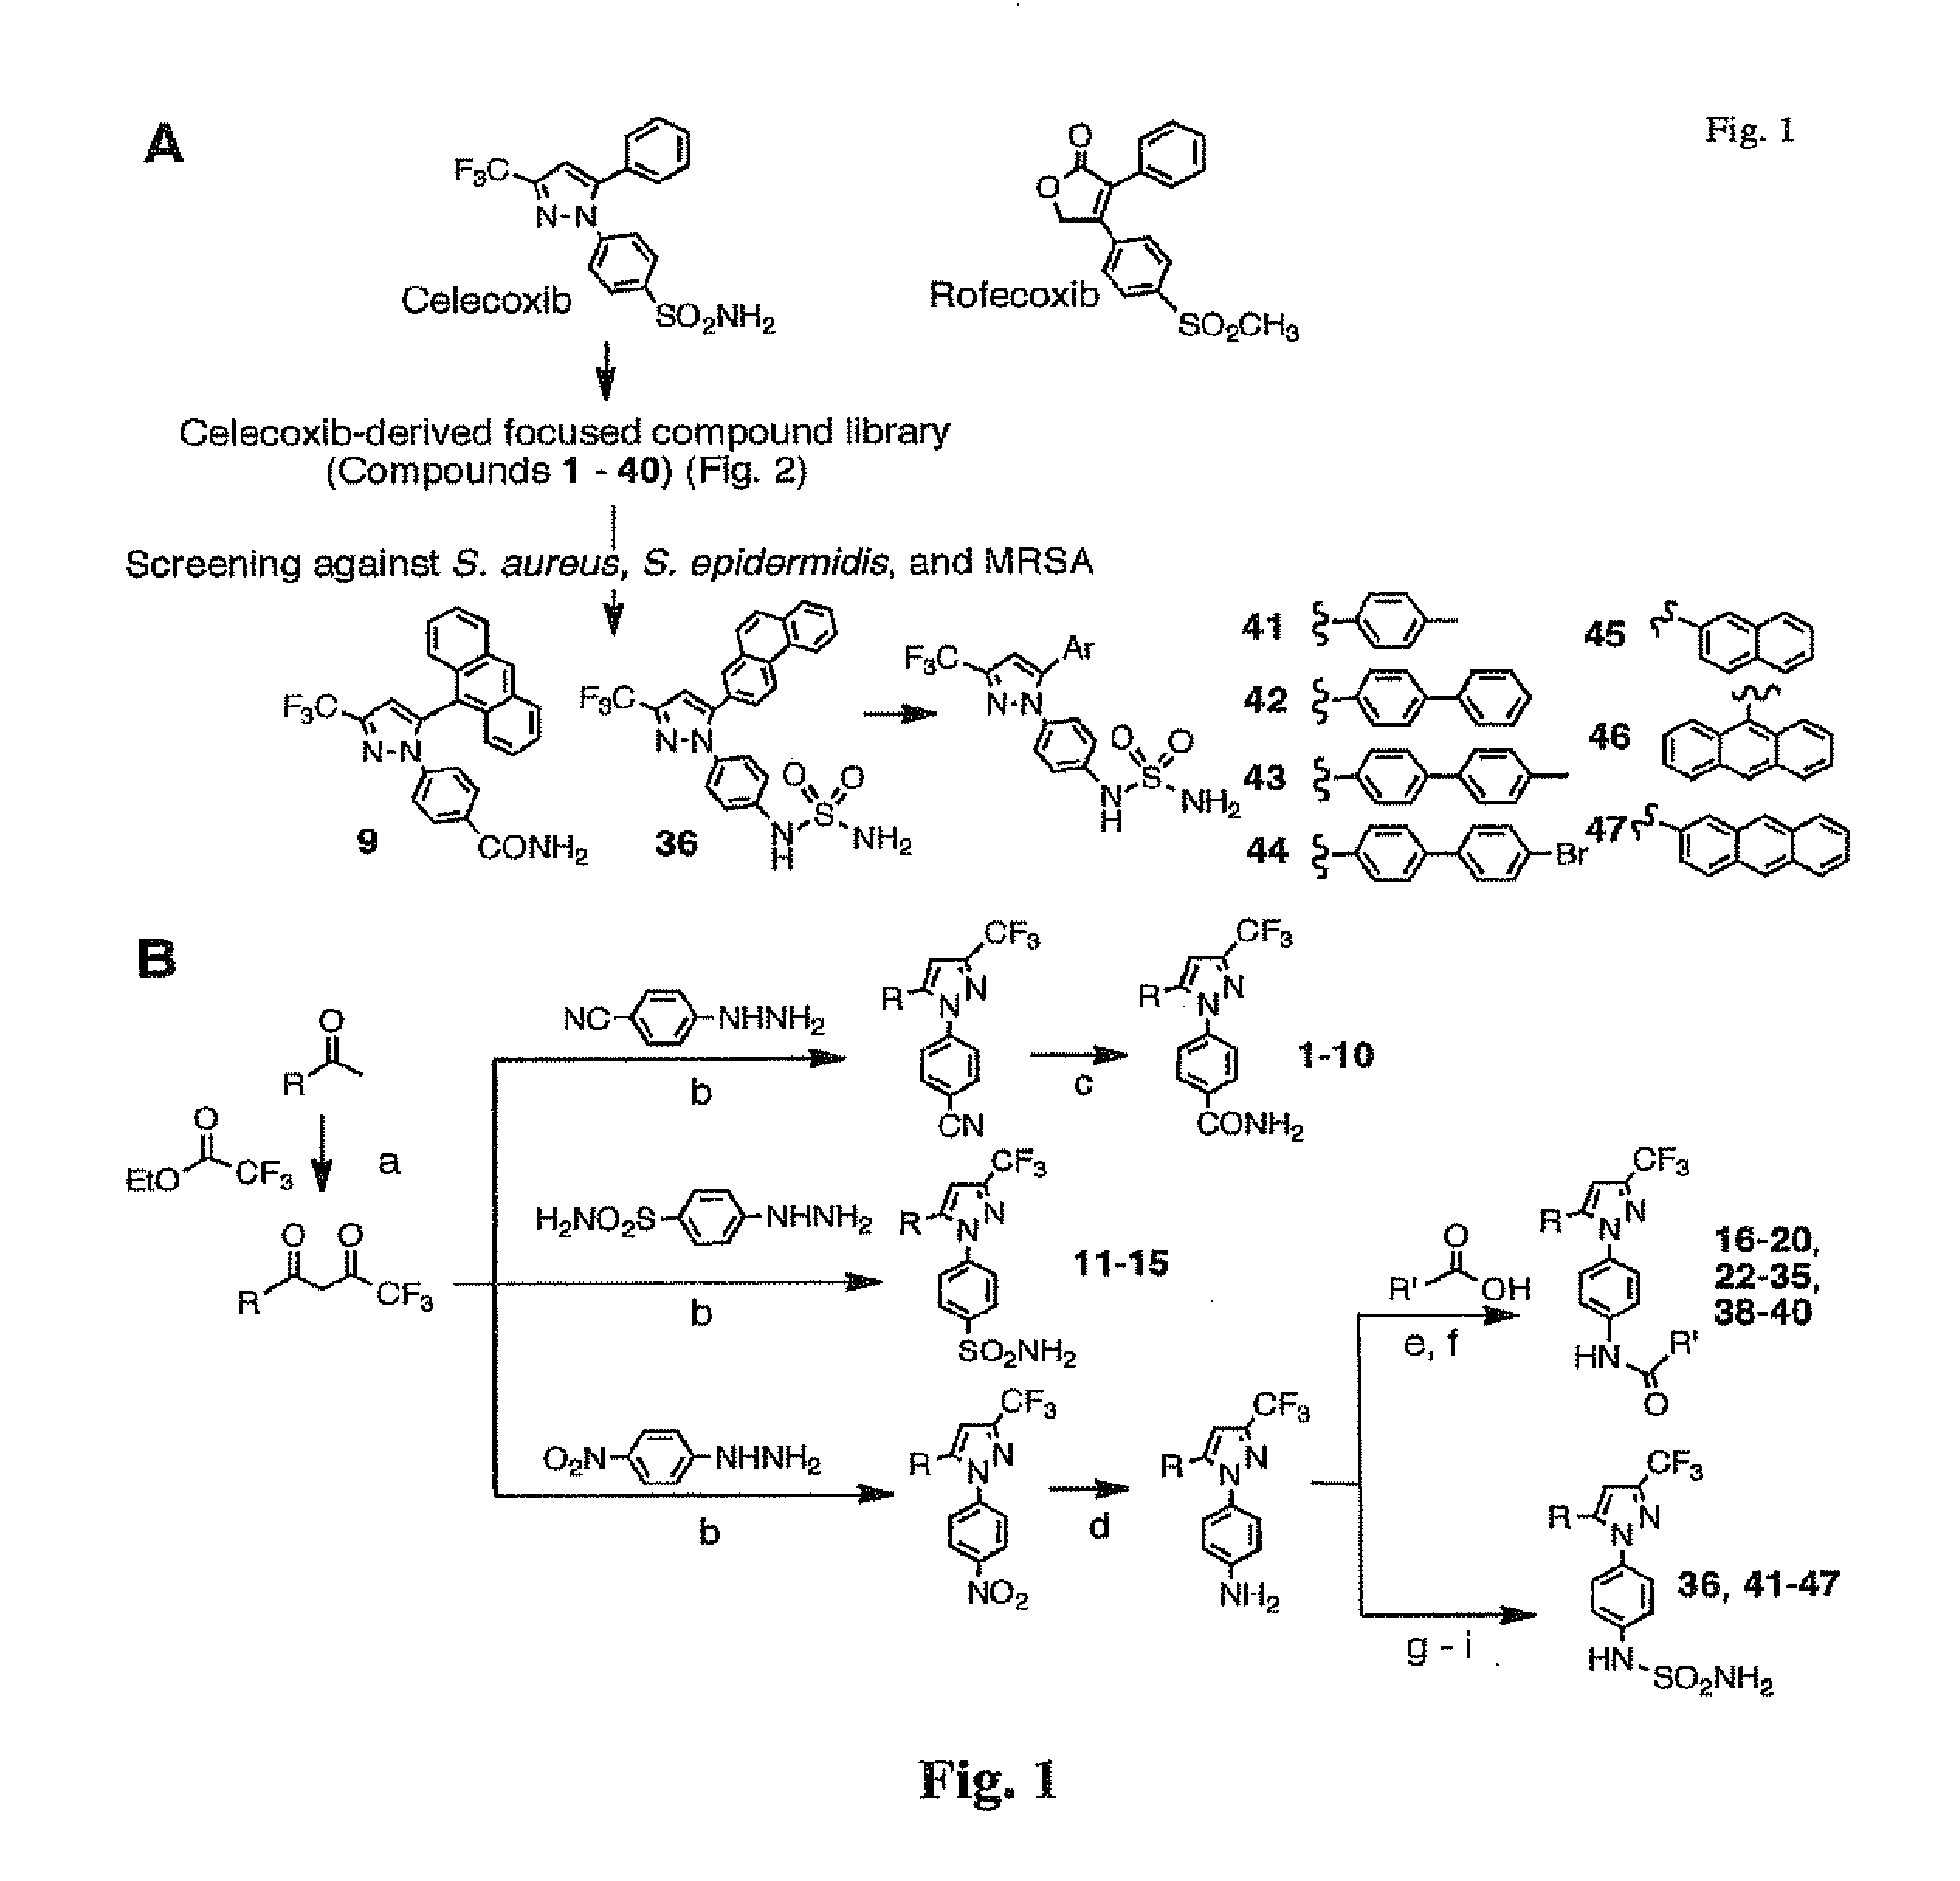 Anti-staphylococcal celecoxib derivatives